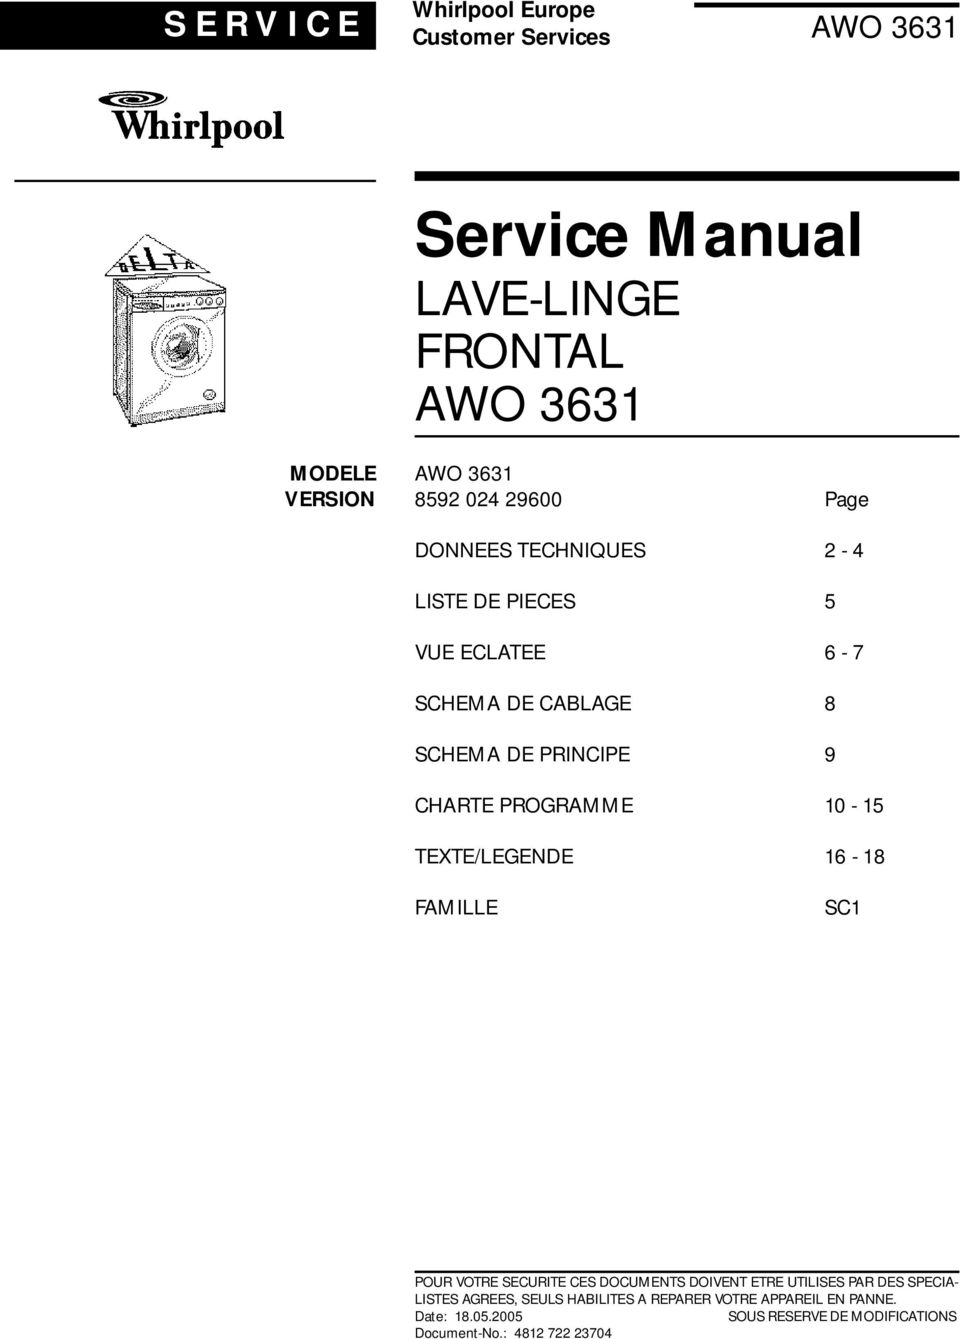 Service Manual LAVE-LINGE FRONTAL - PDF Free Download